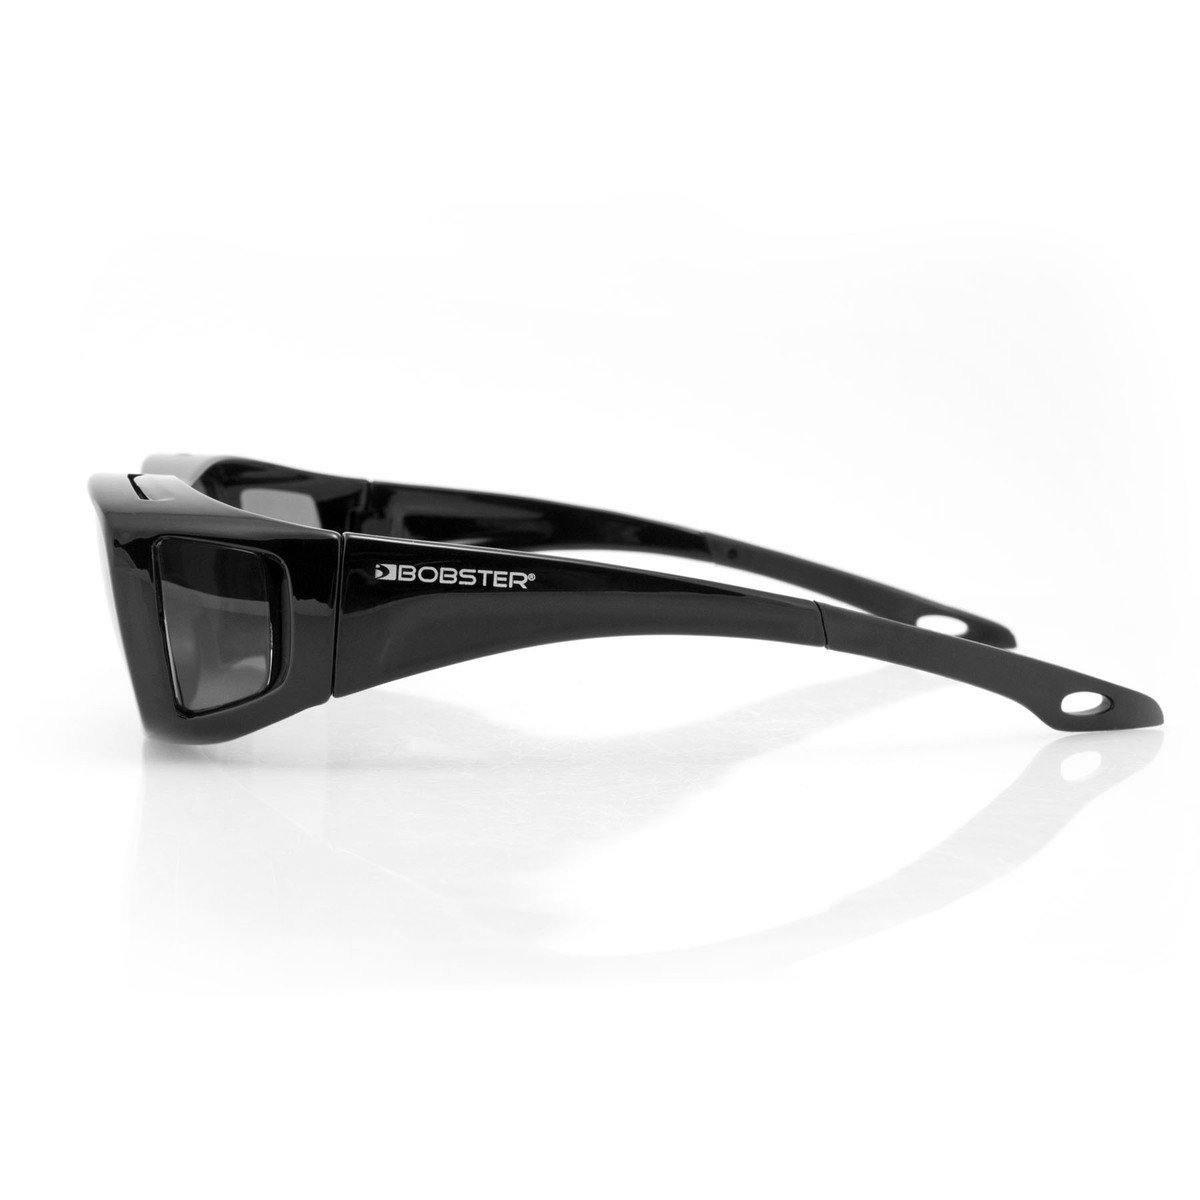 Bobster Condor 2 Sunglasses - 15% Off! American Legend Rider